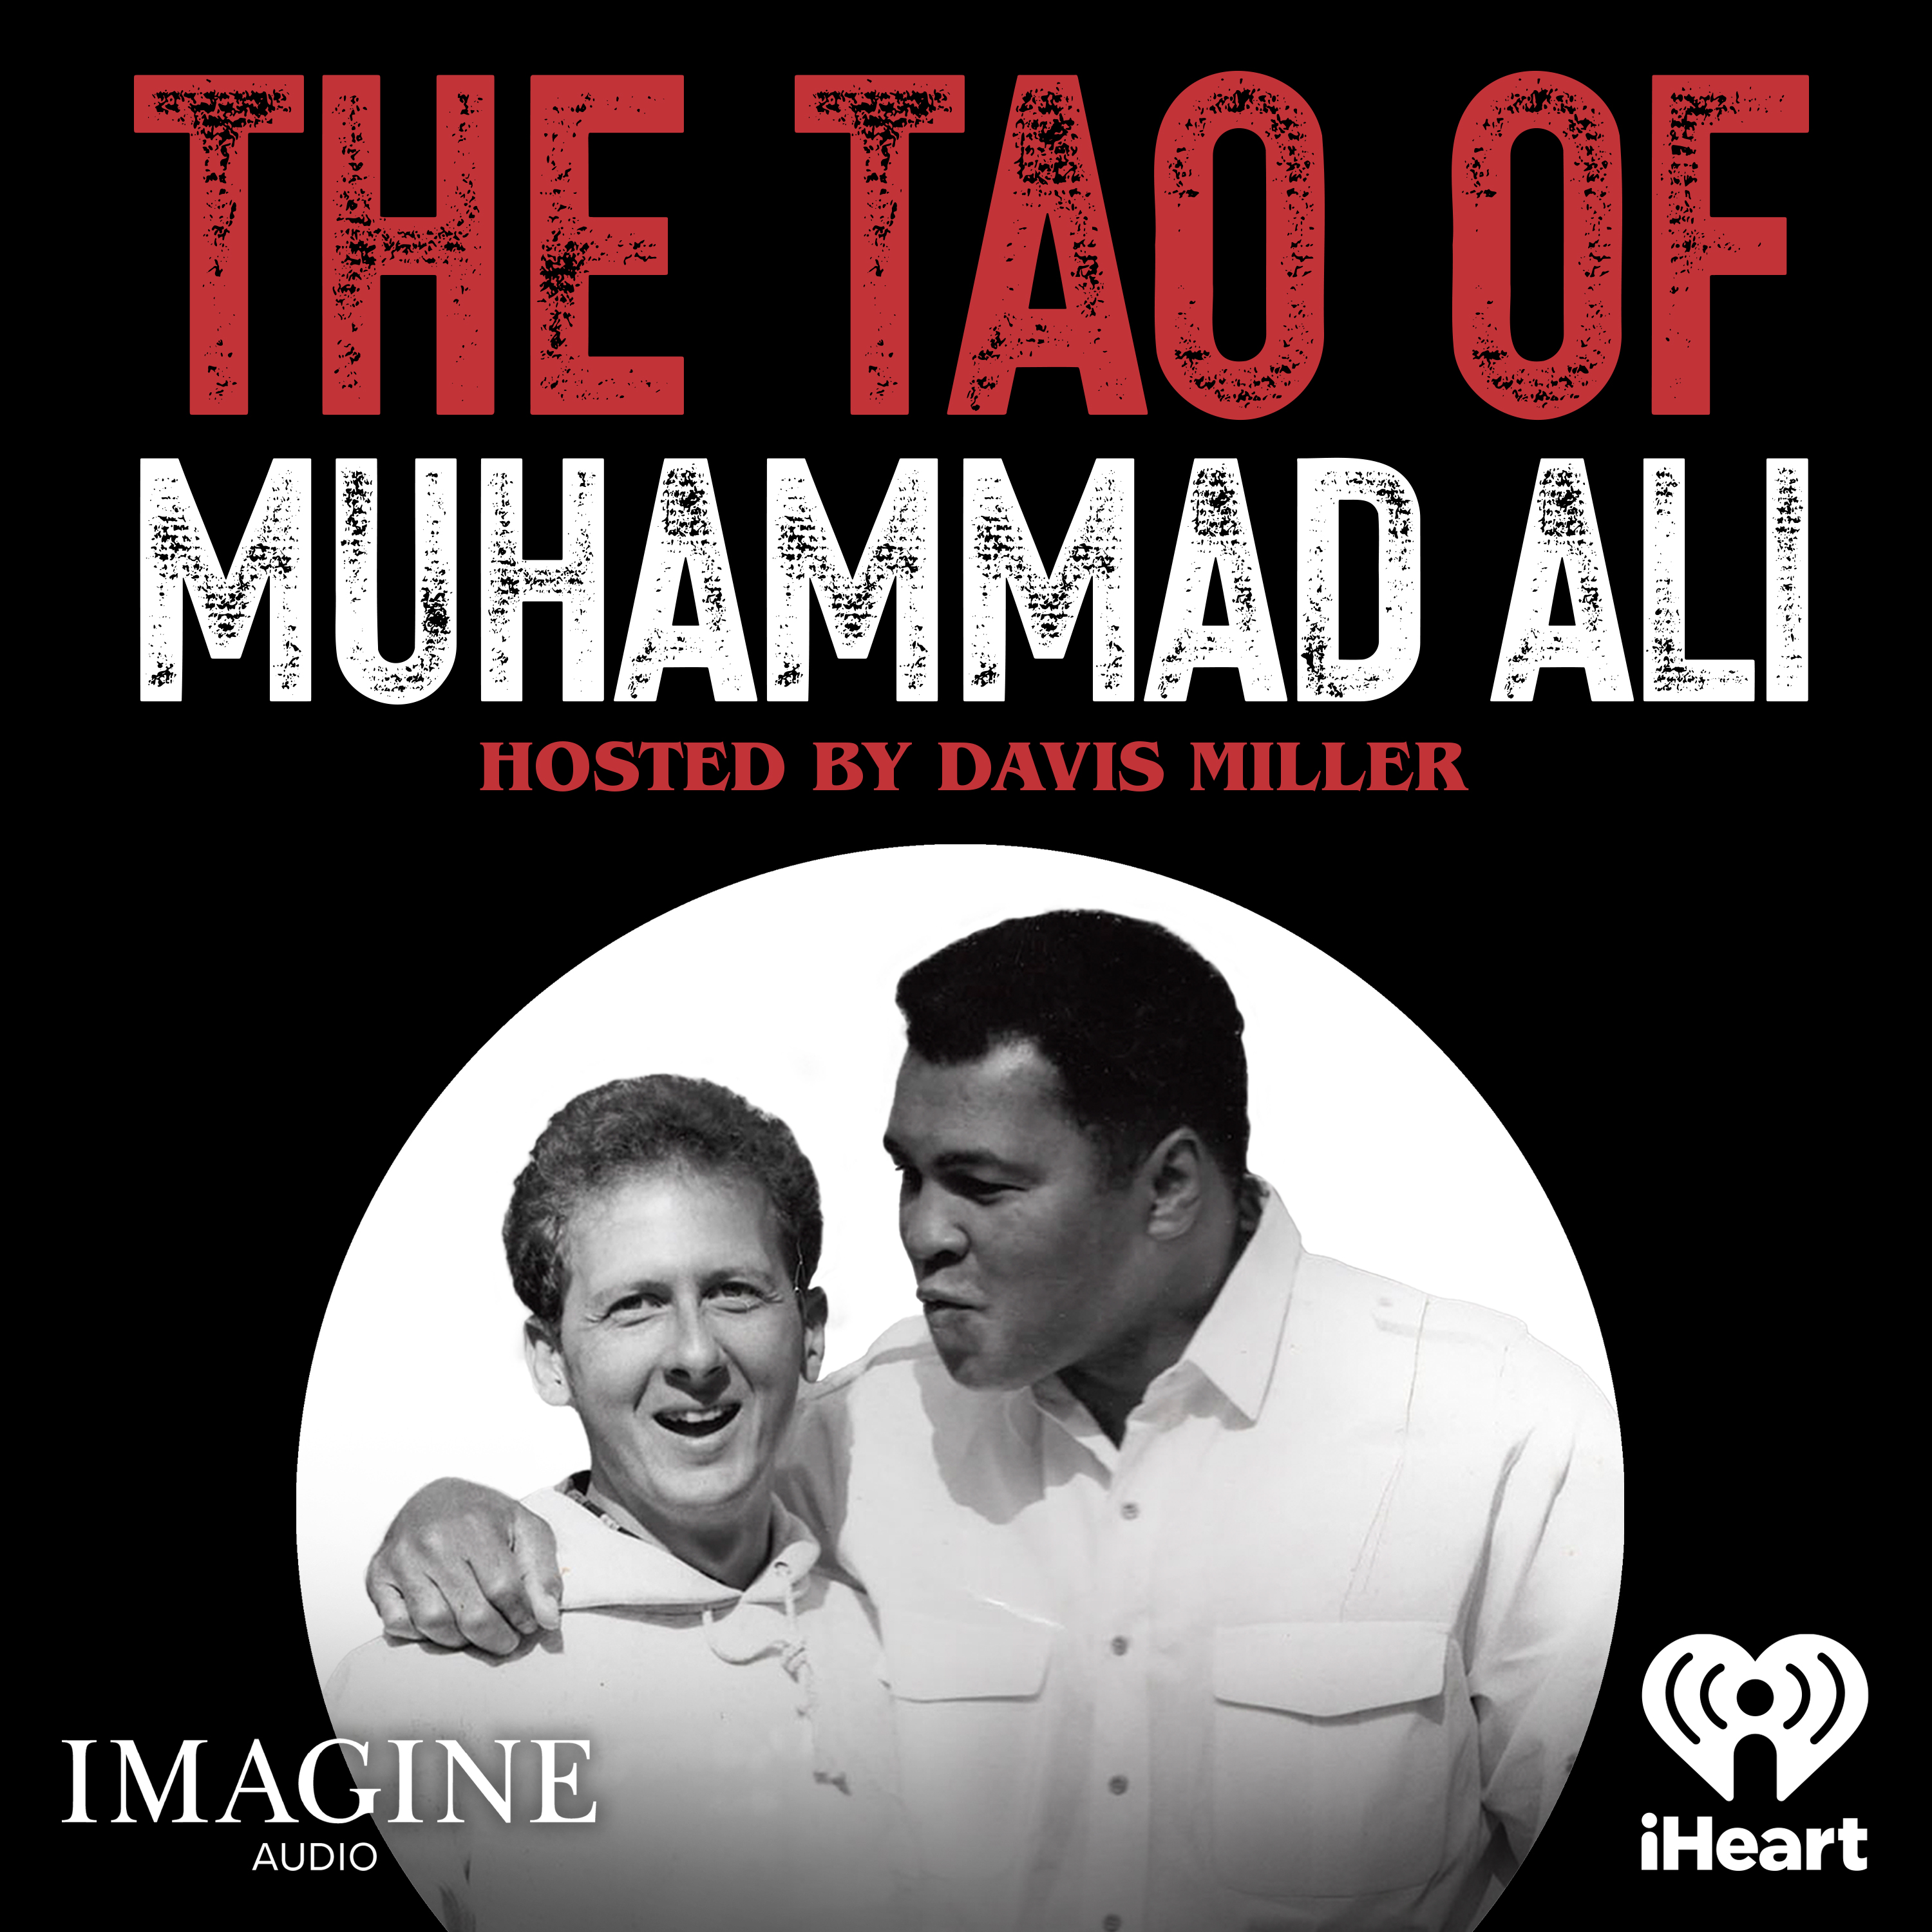 The Tao of Muhammad Ali: E4 Paradise Regained (with Imam Zaid Shakir)